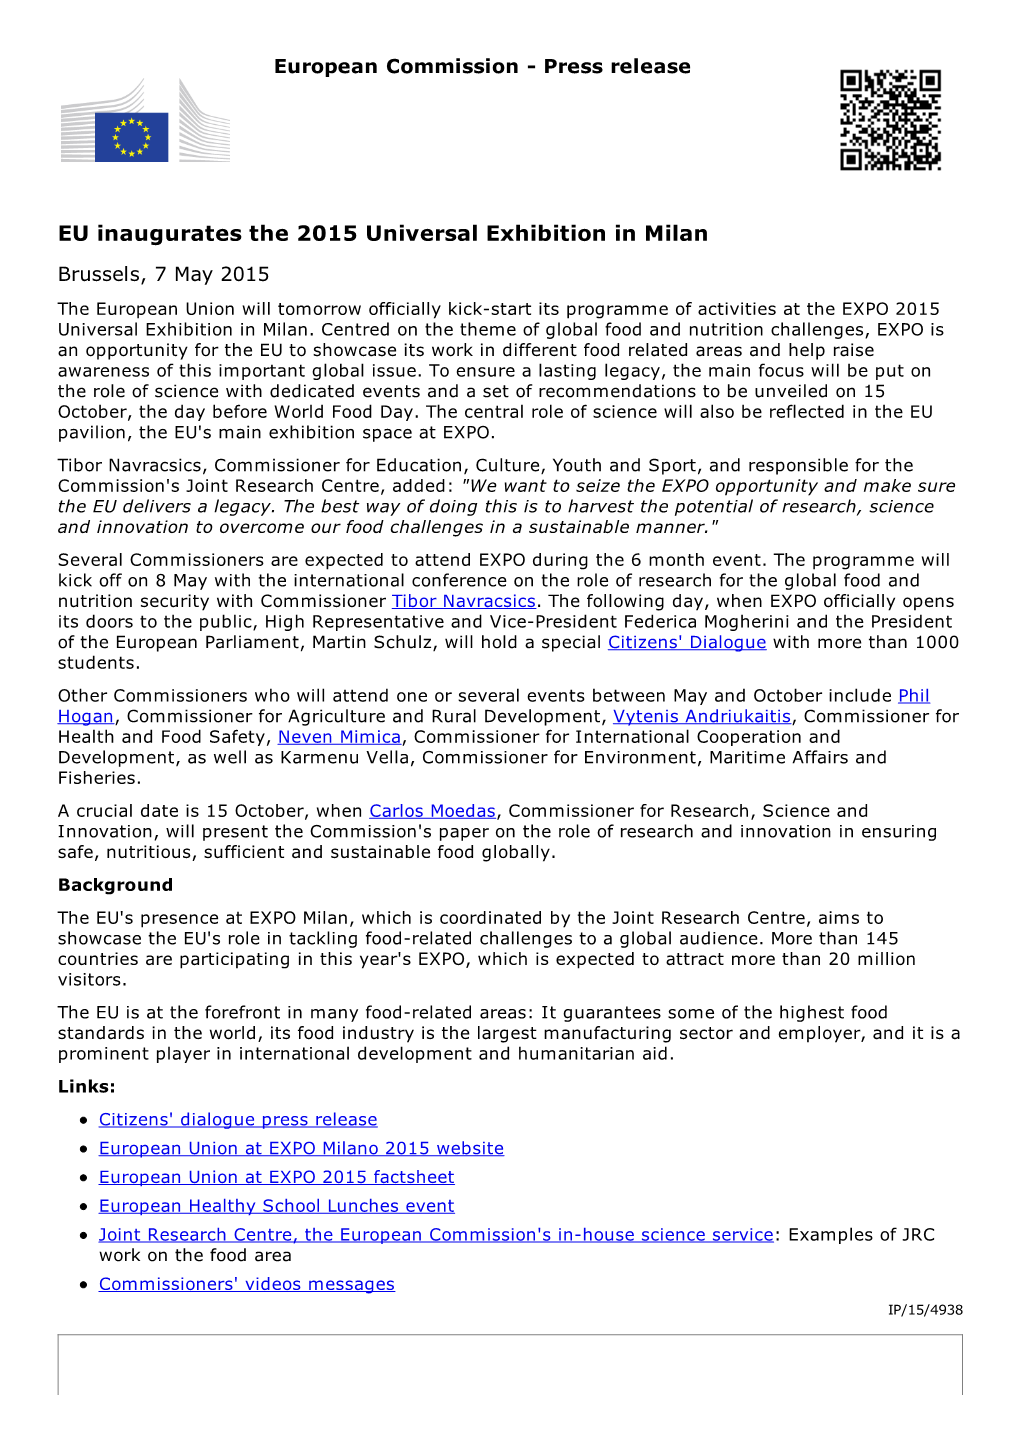 EU Inaugurates the 2015 Universal Exhibition in Milan